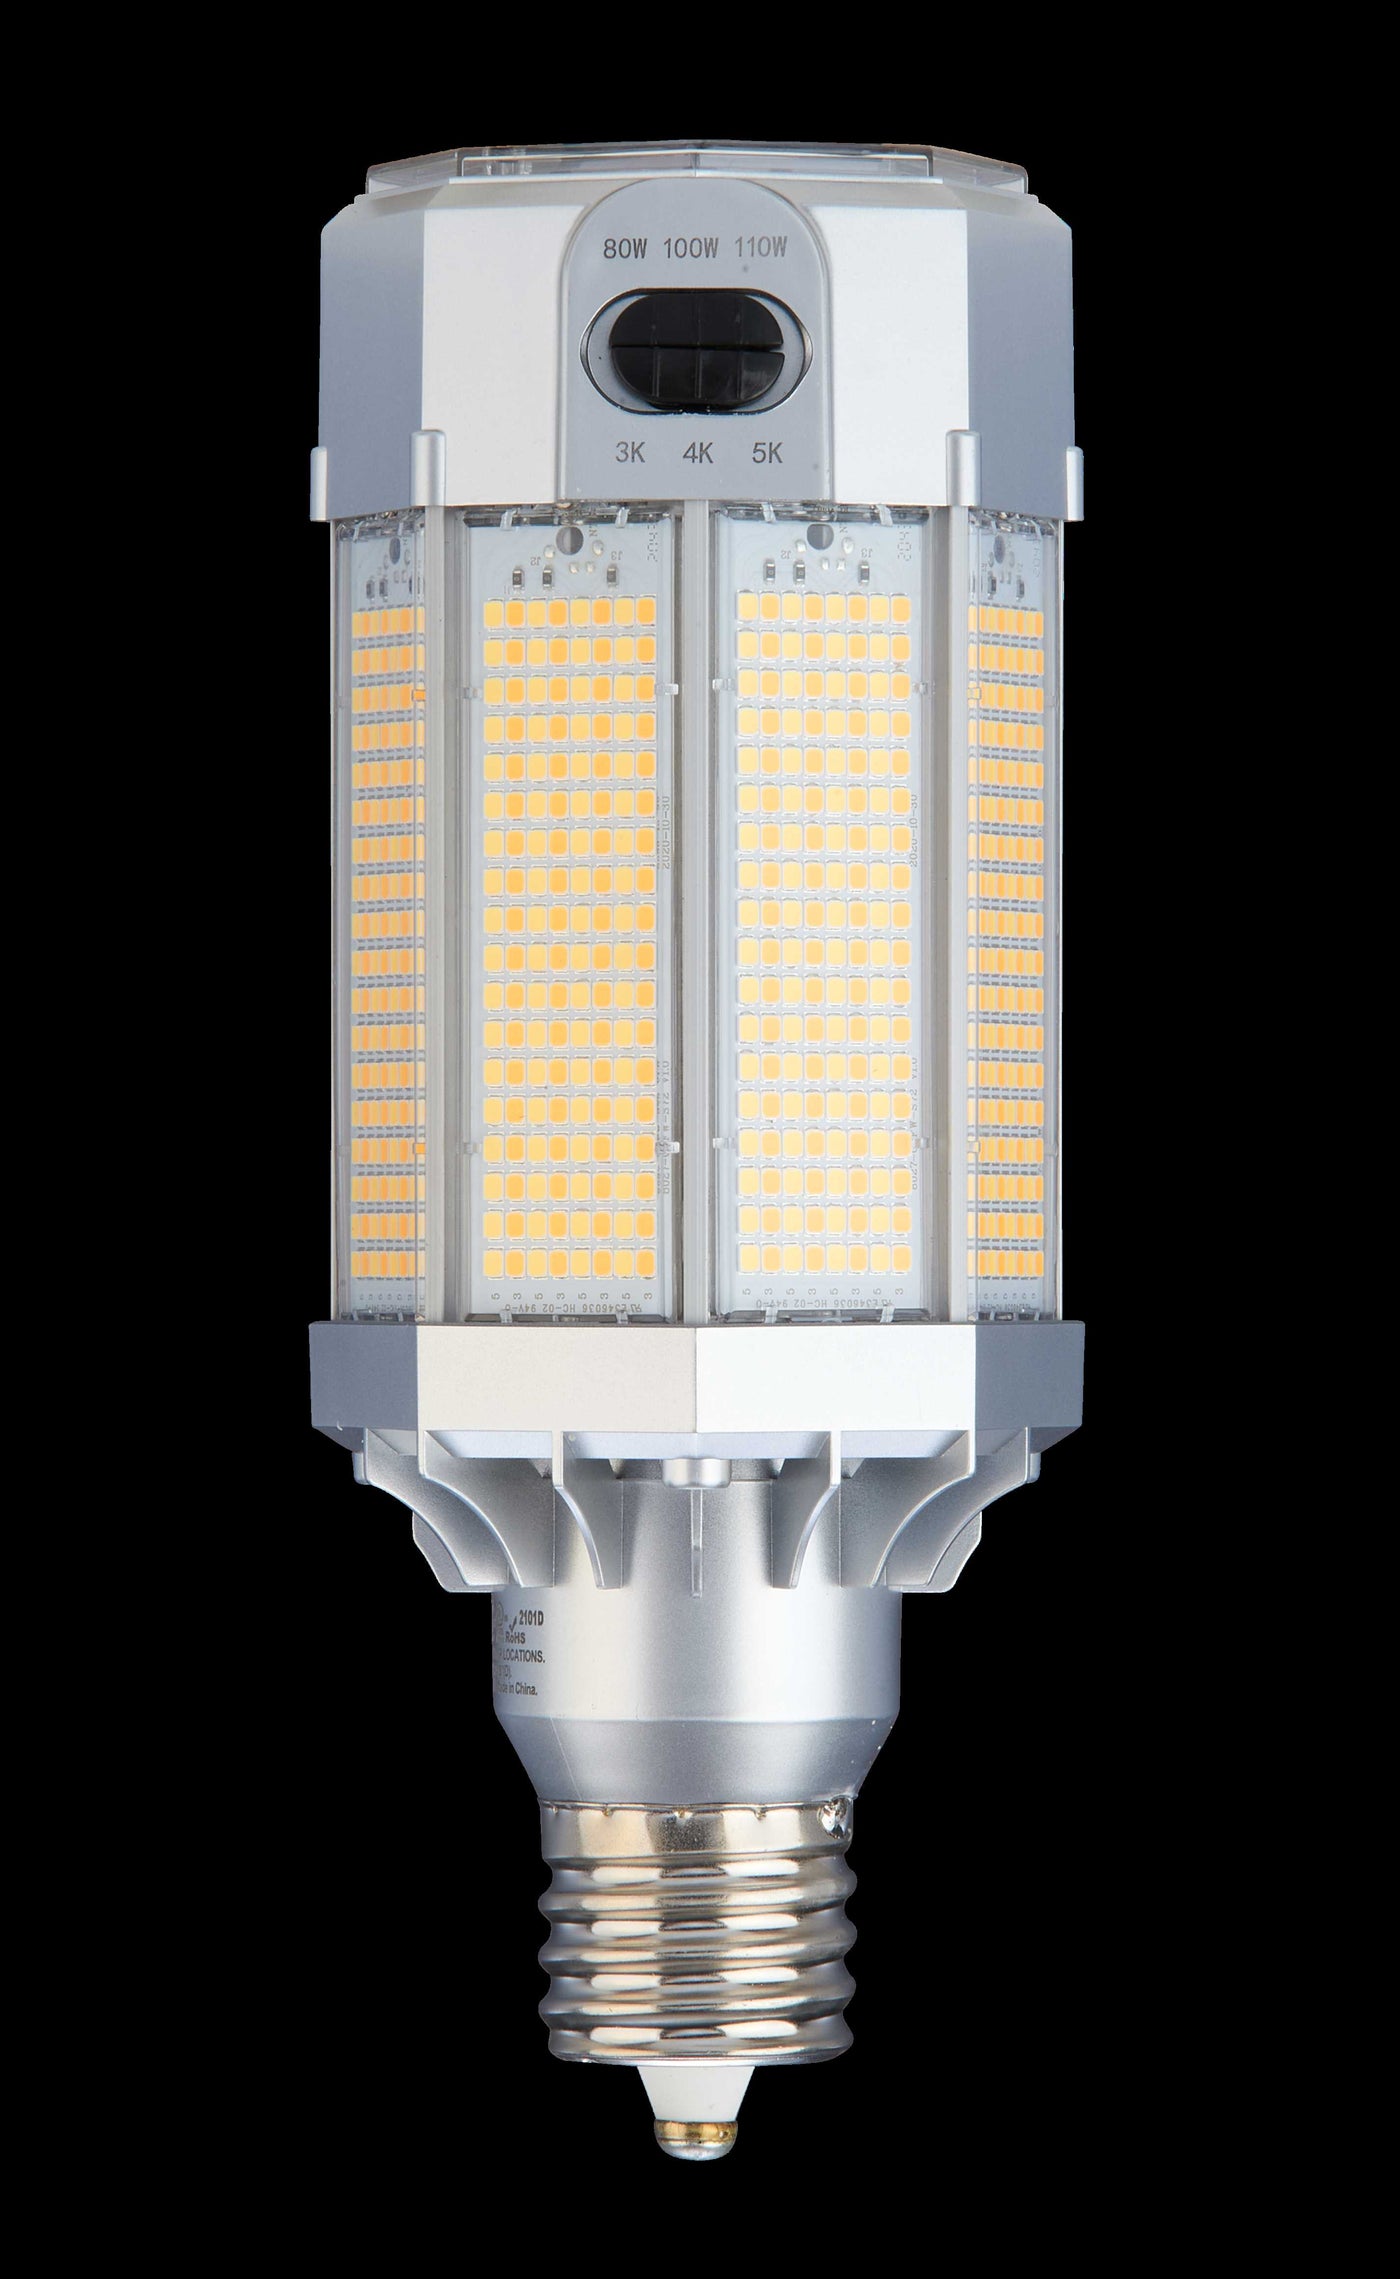 LED Superflex Bollard/Post Light Retrofit, 15,730 Lumens 80W/100W/110W selectable, 120-277V CCT Selectable 3000K/4000K/5000K